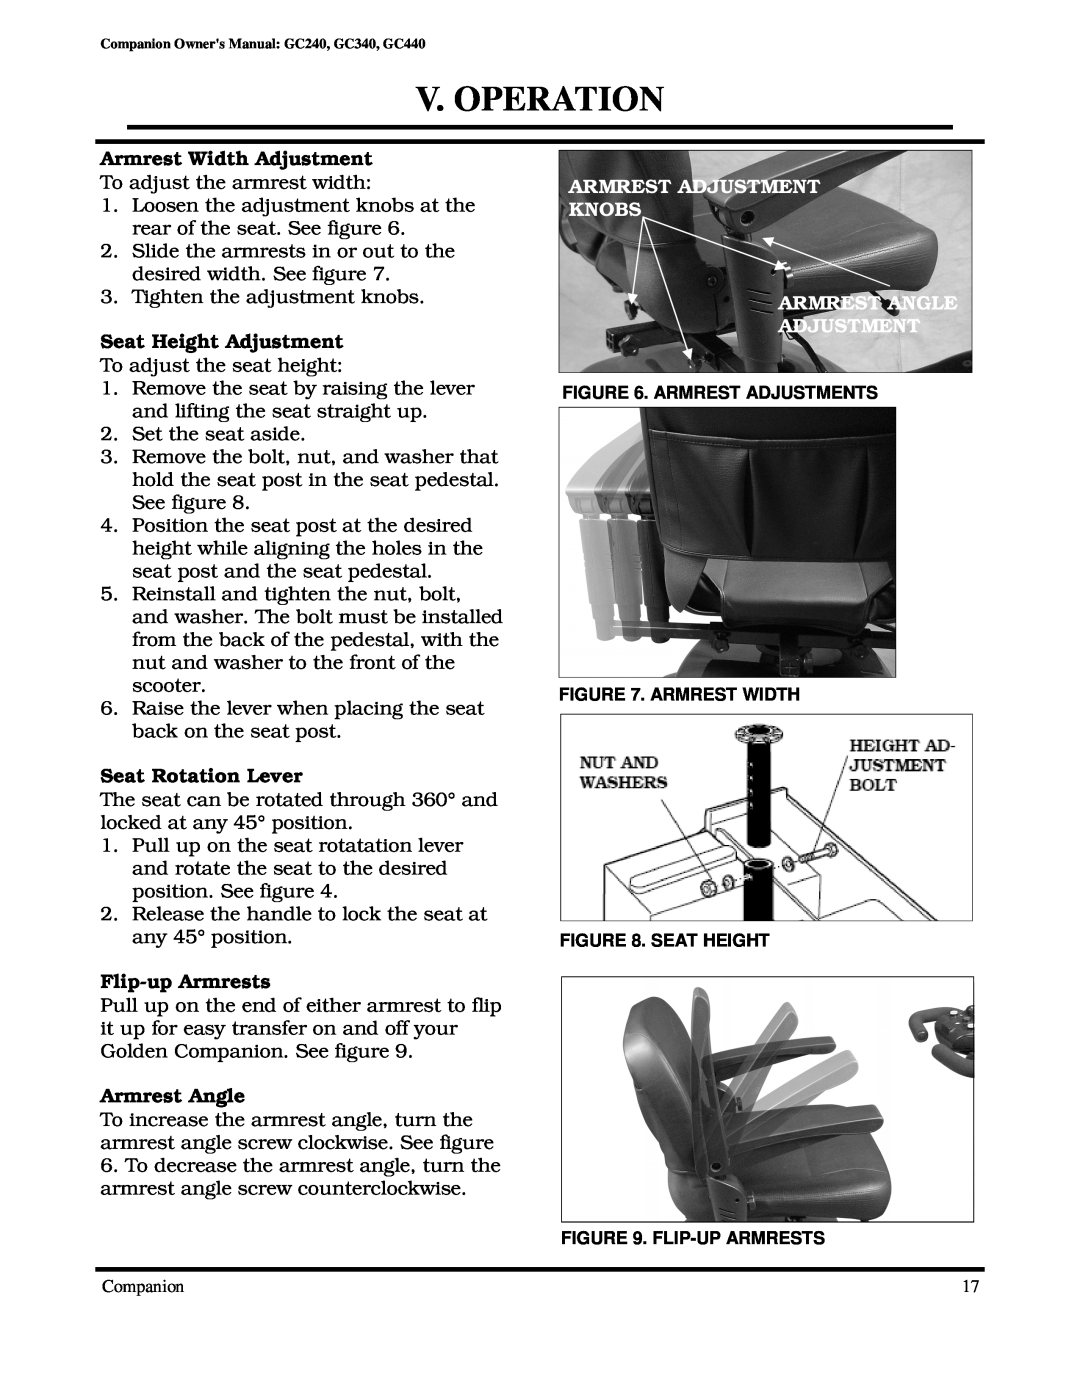 Golden Technologies GC440, GC240, GC340 V. Operation, Armrest Width Adjustment, Seat Height Adjustment, Seat Rotation Lever 